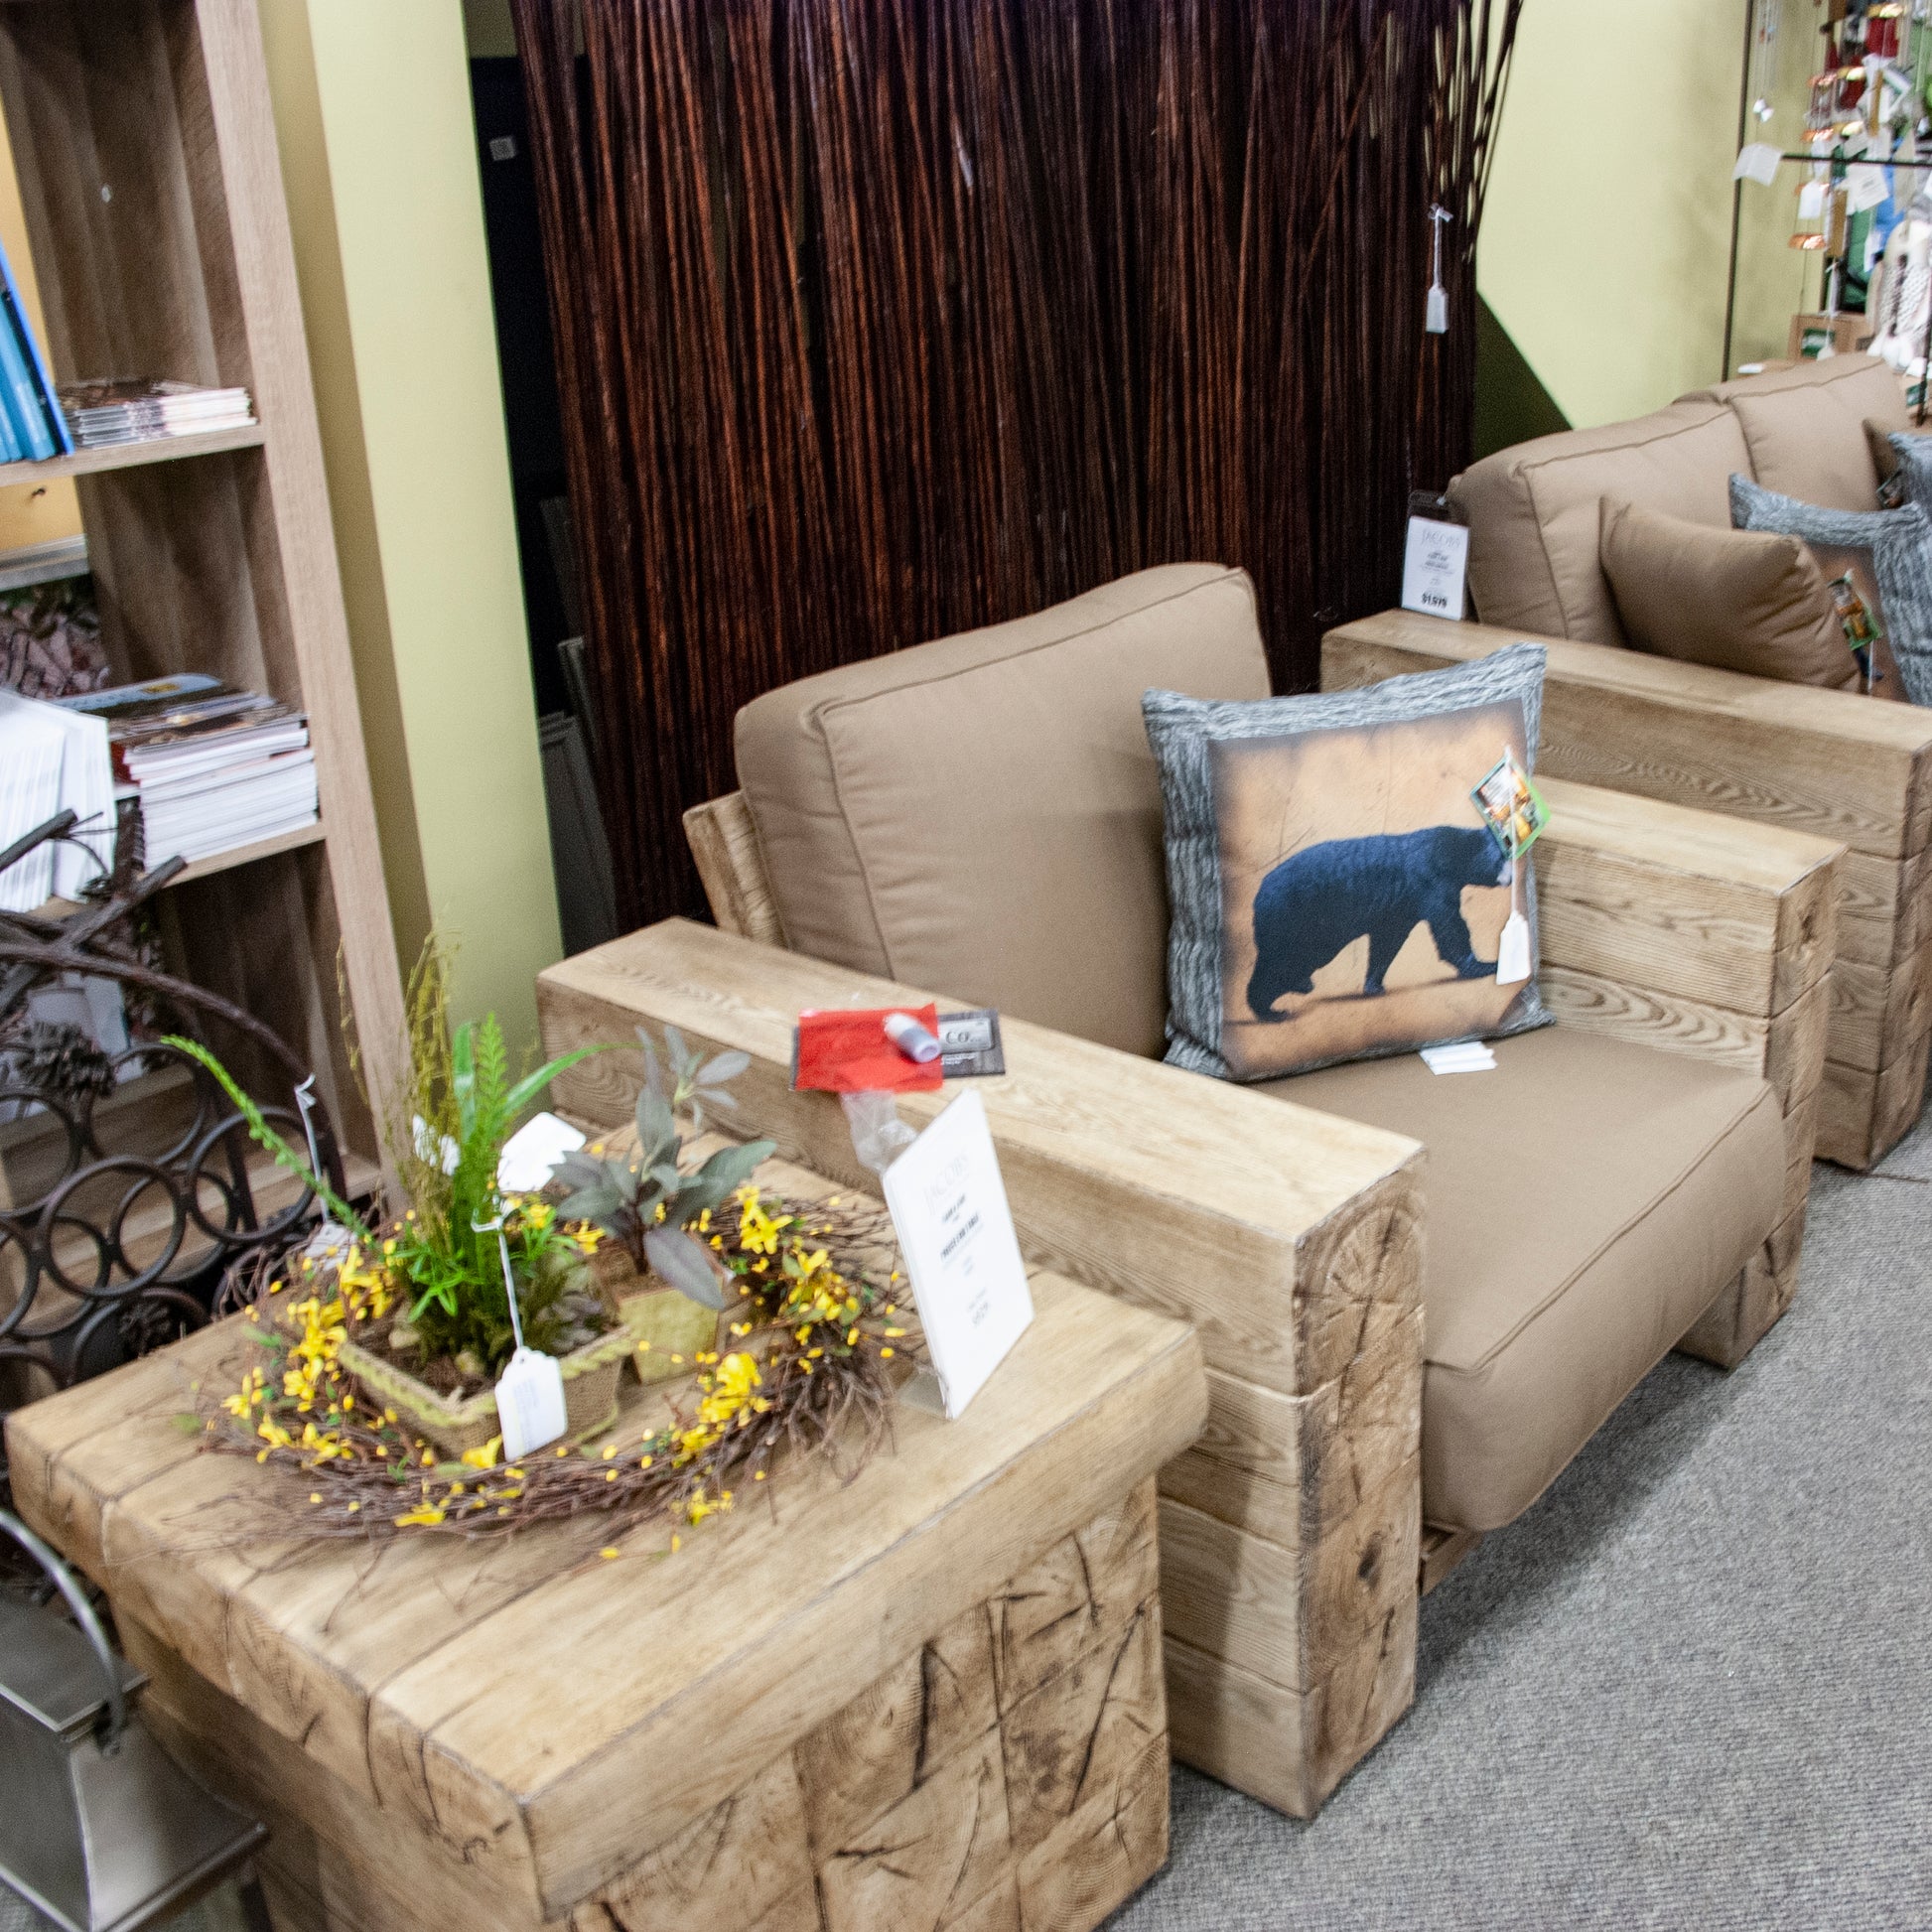 Plank and Hide Preece Lounge Chair | Jacobs Custom Living